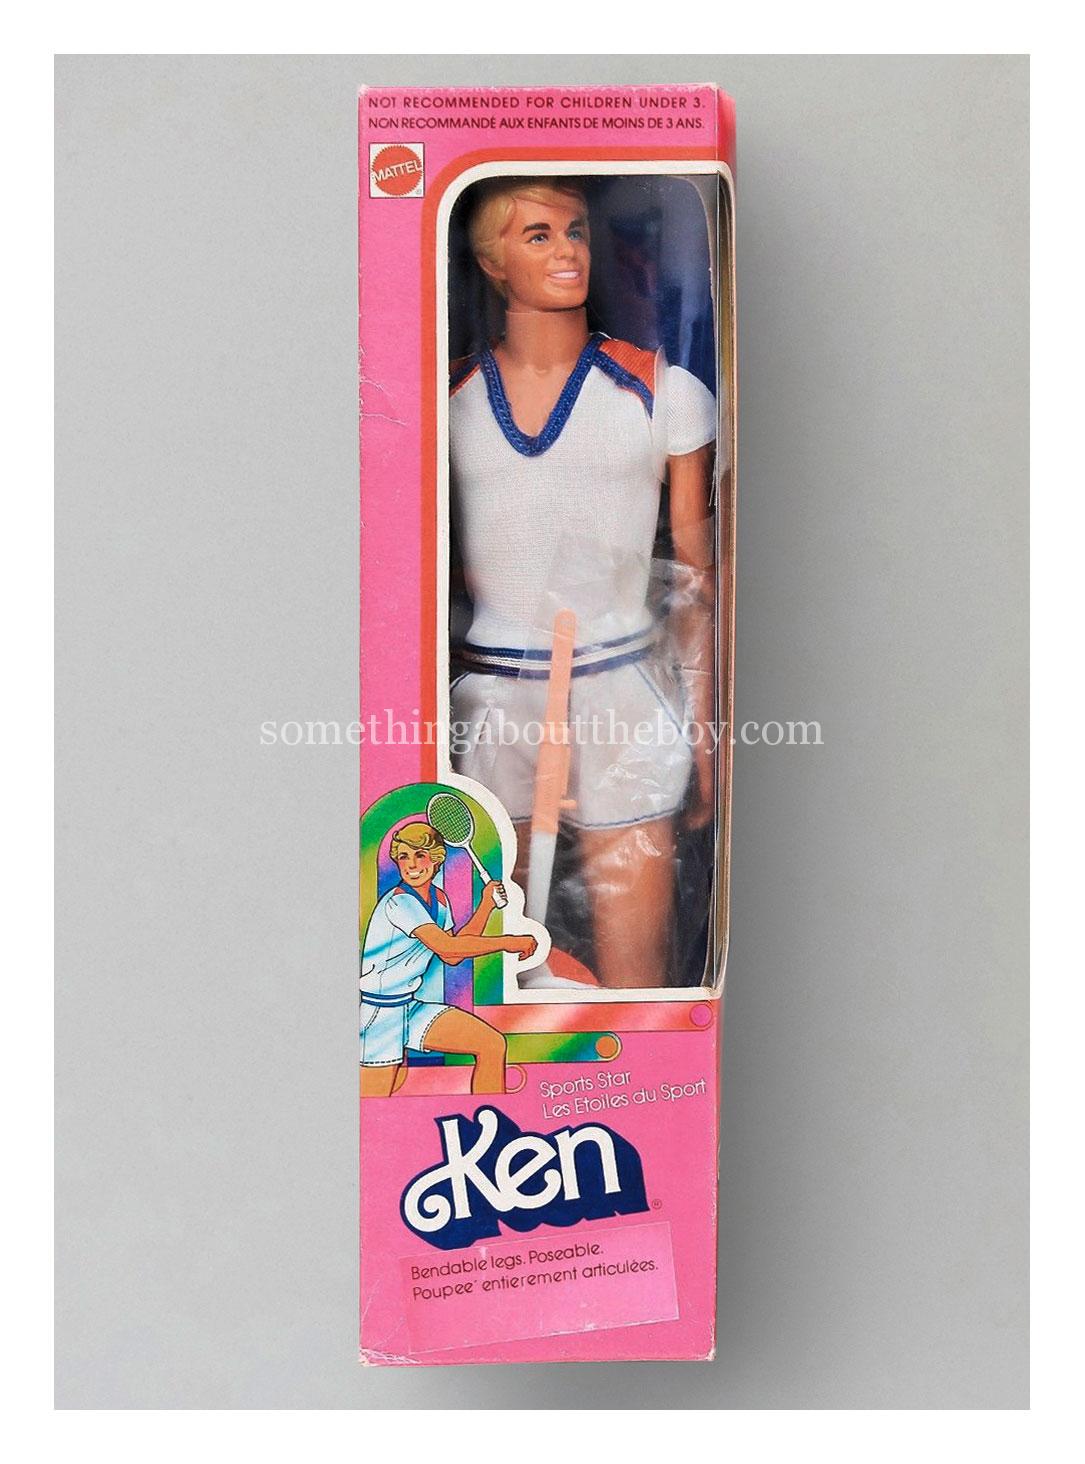 1980 #1336 Sports Star Ken with correction sticker